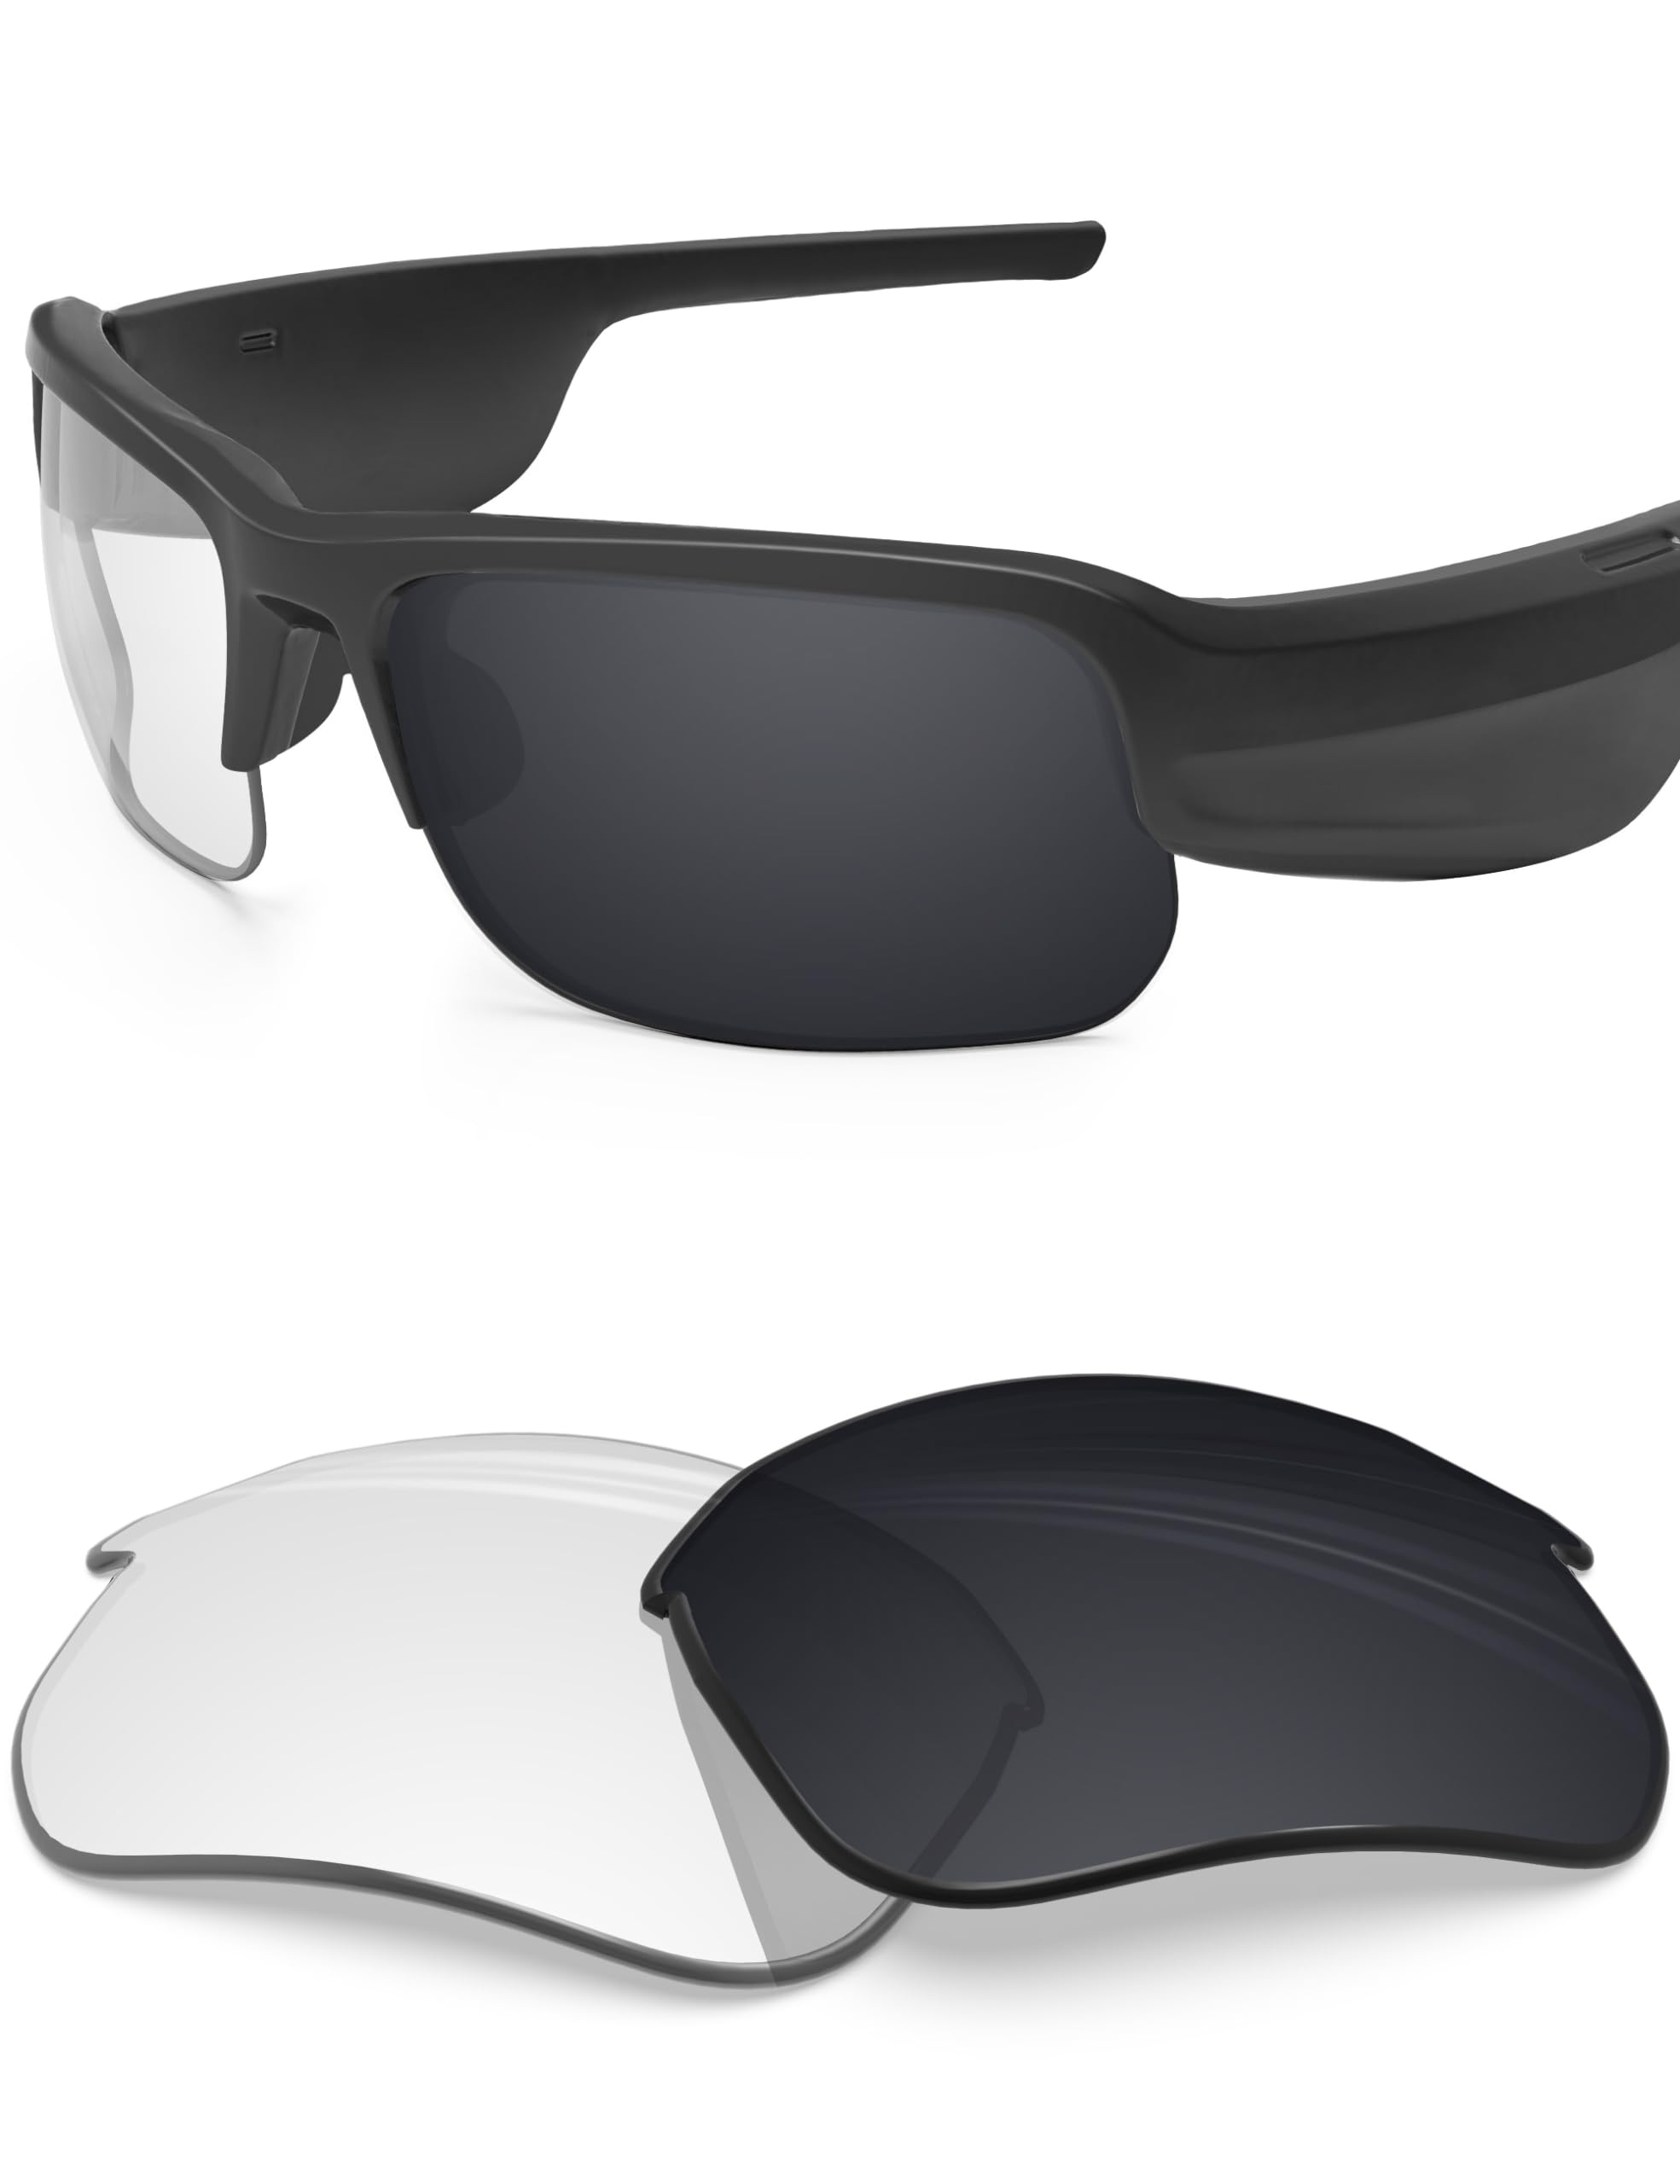 BLAZERBUCK Polycarbonate Replacement Lenses for BOSE Tempo Sunglasses - Clear Black Photochromic